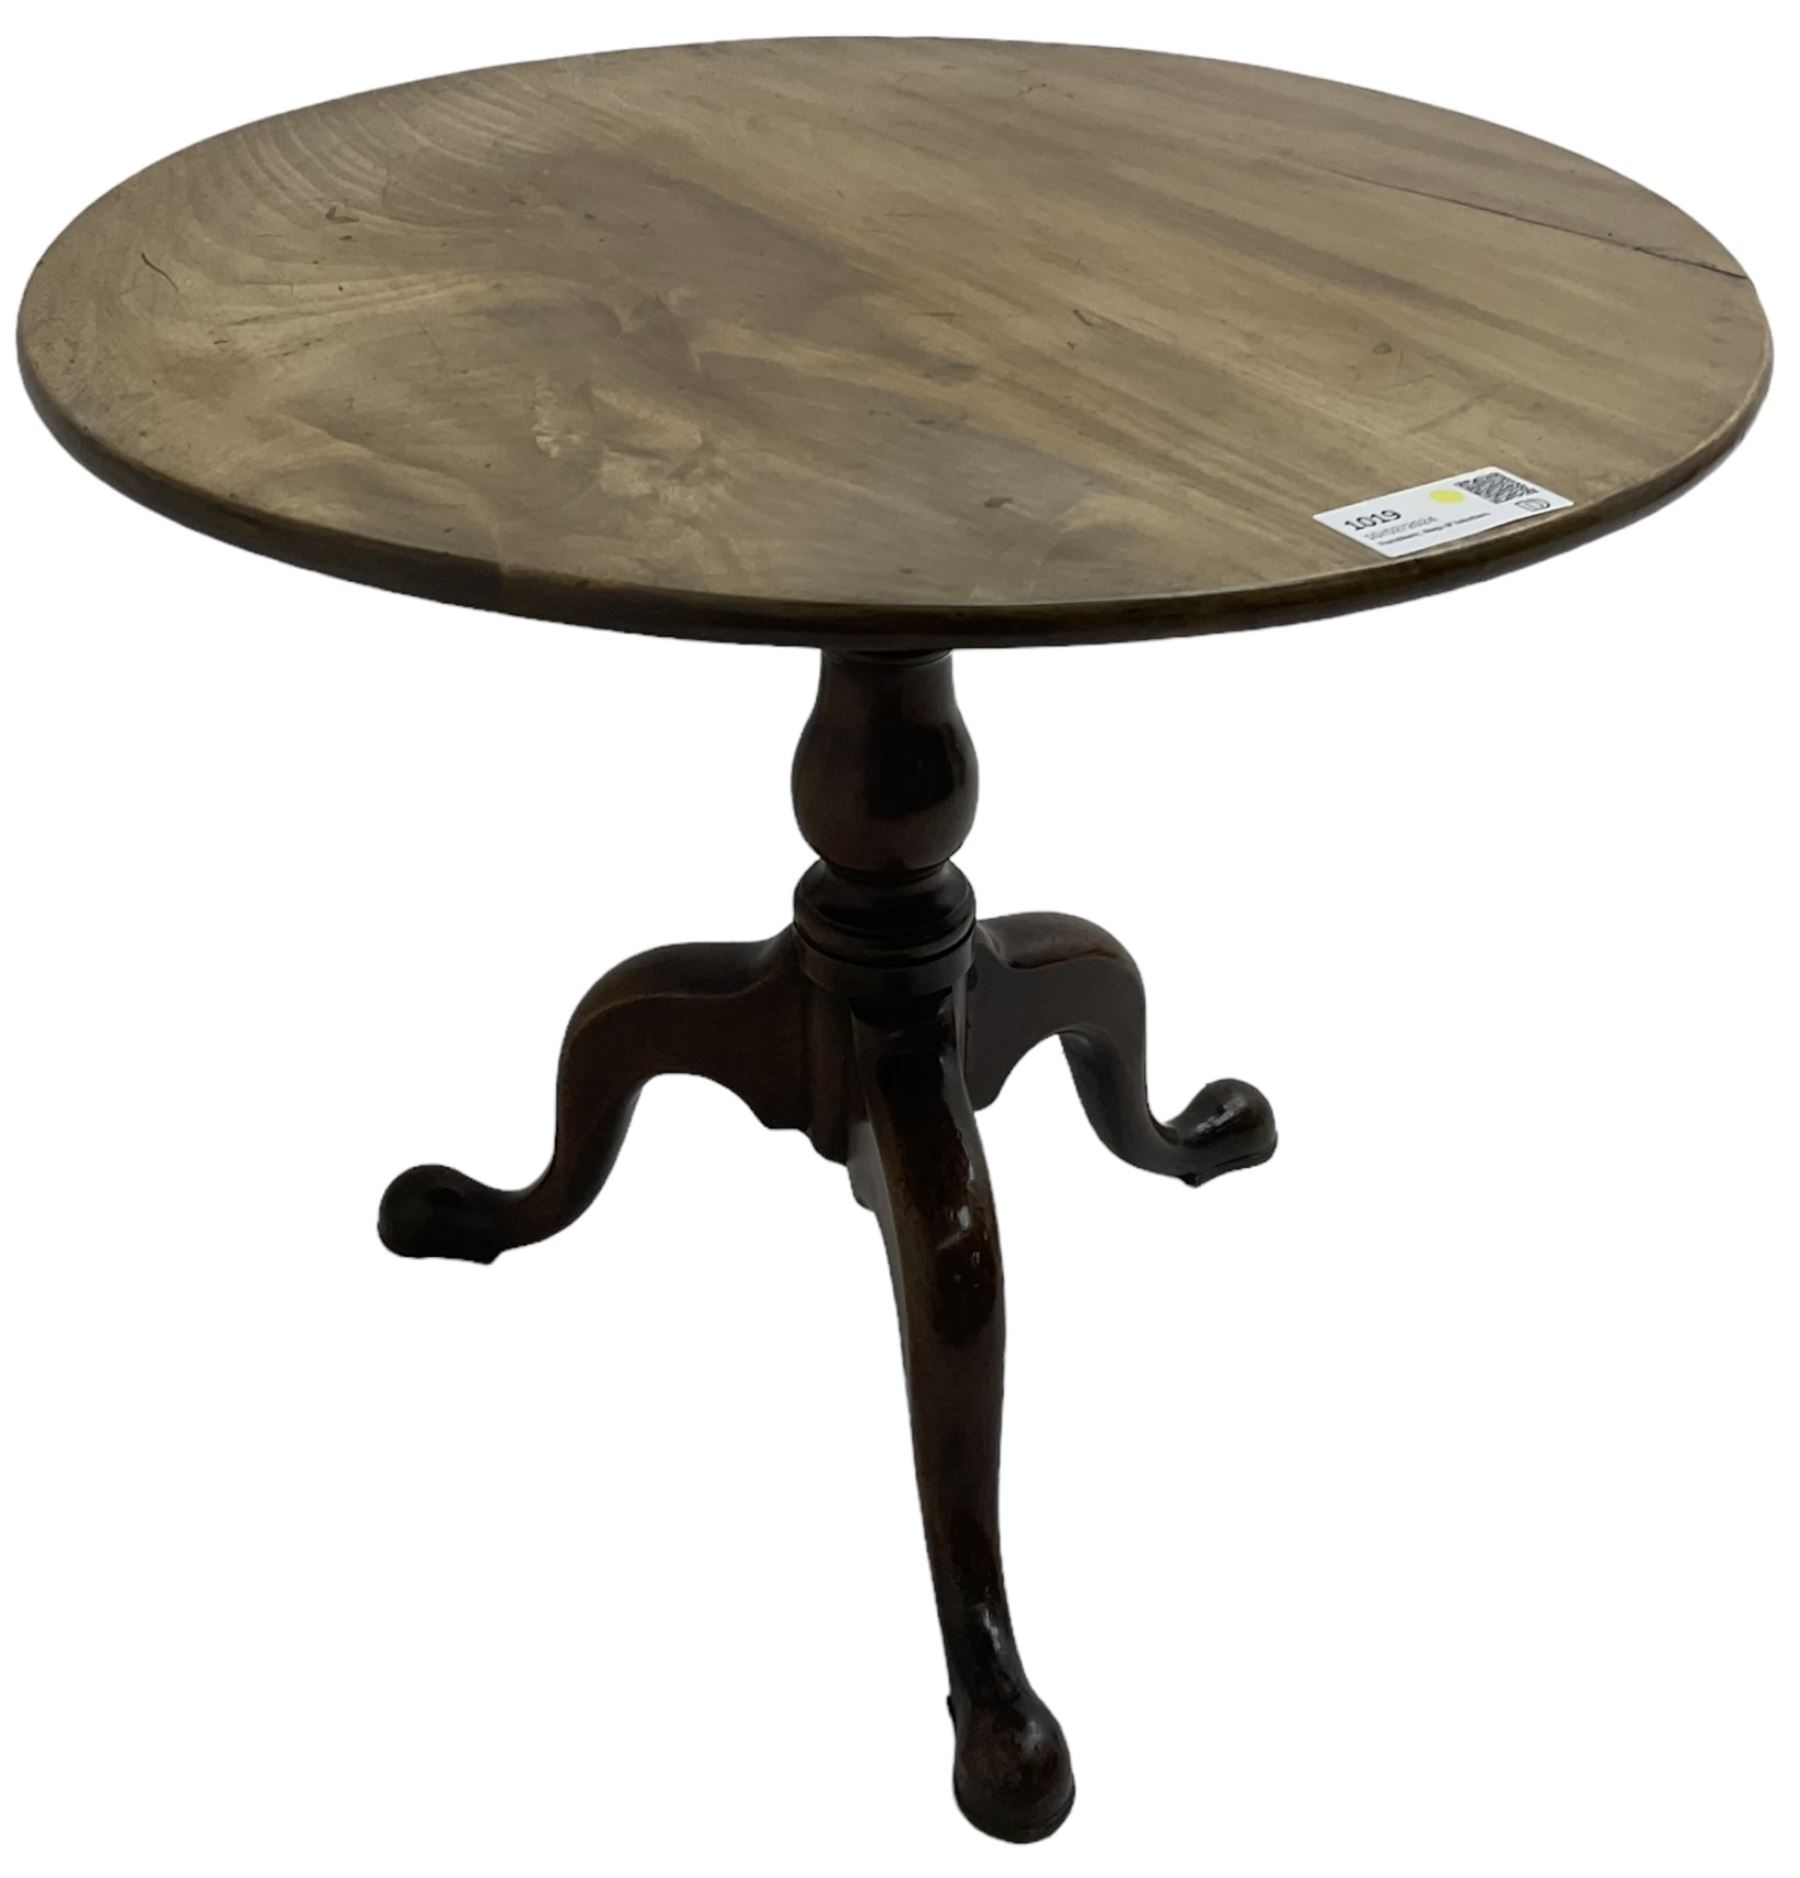 19th century mahogany pedestal table - Image 3 of 6